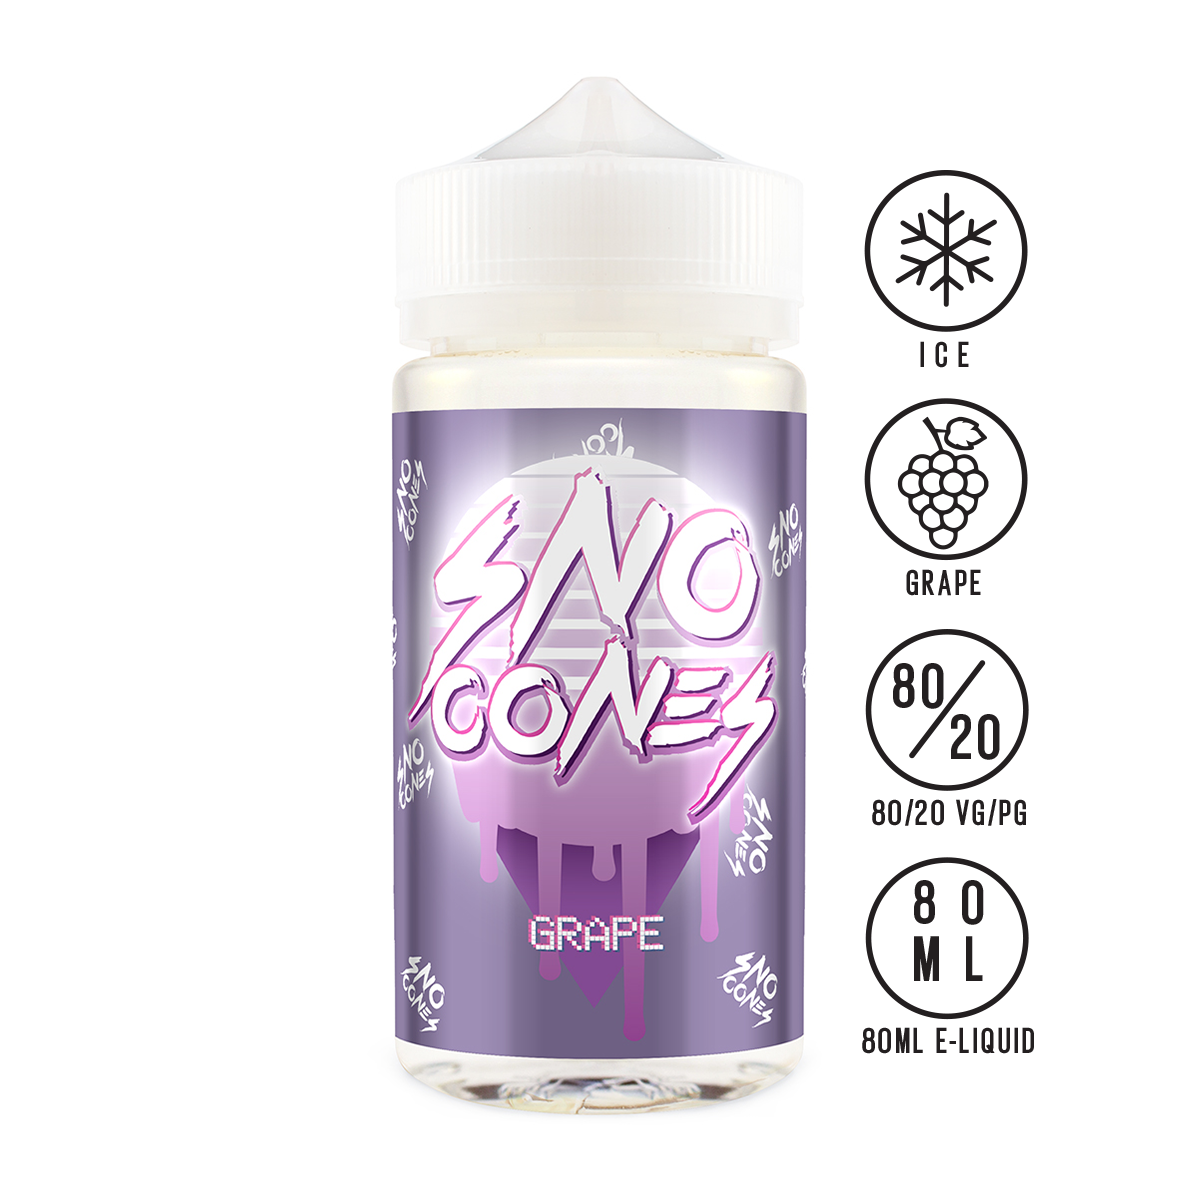 Sno Cones - Grape 80ML - The Ace Of Vapez